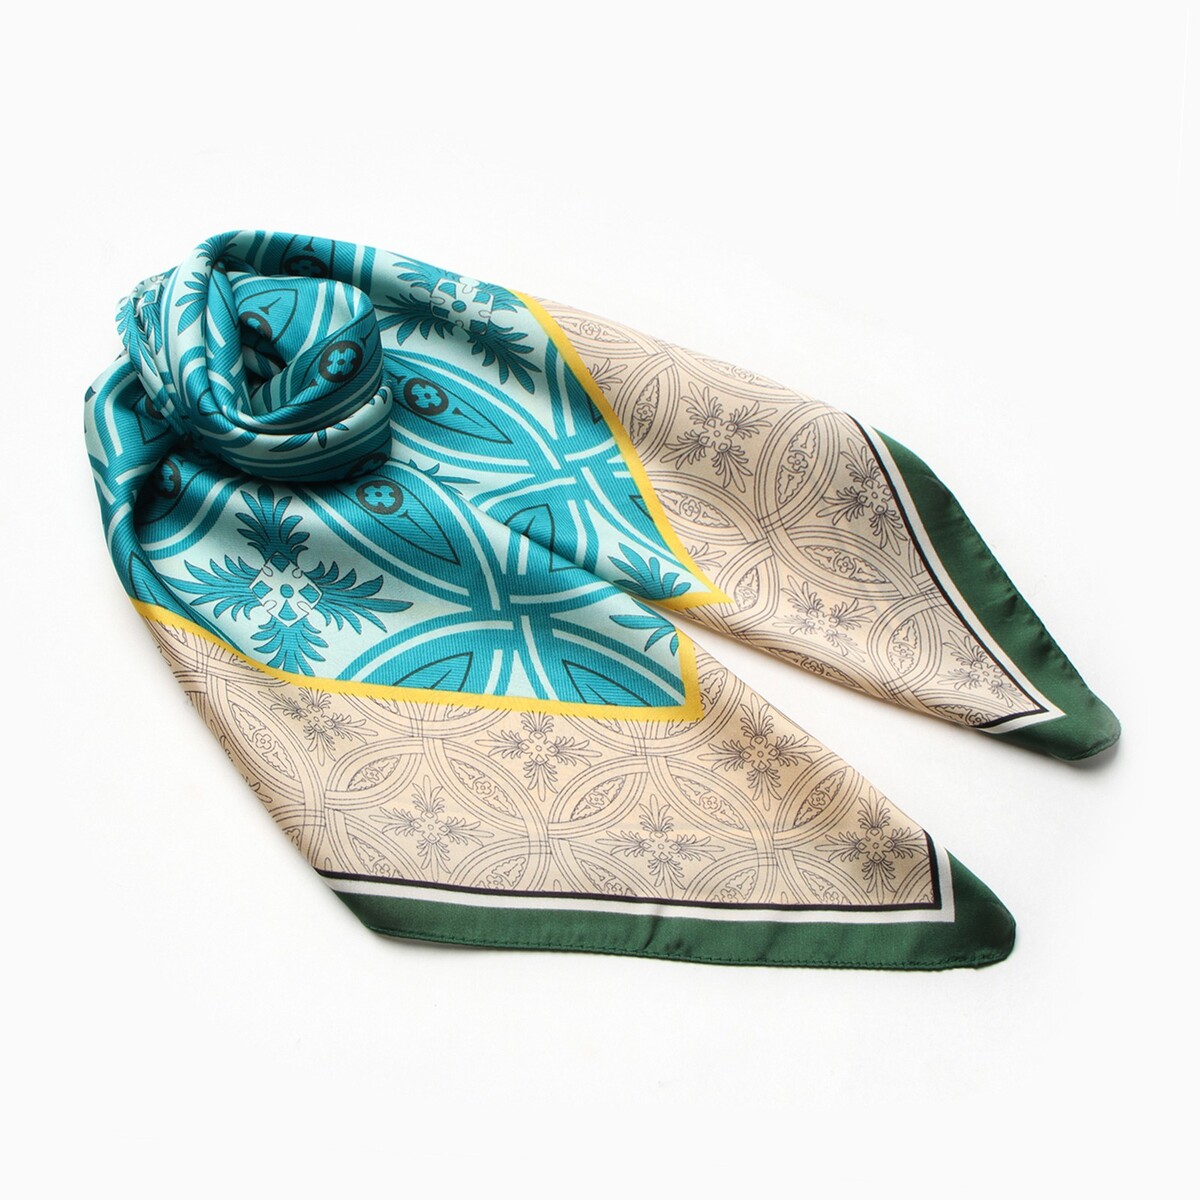 Платок платок со скороговоркой сальвадор 48х48см